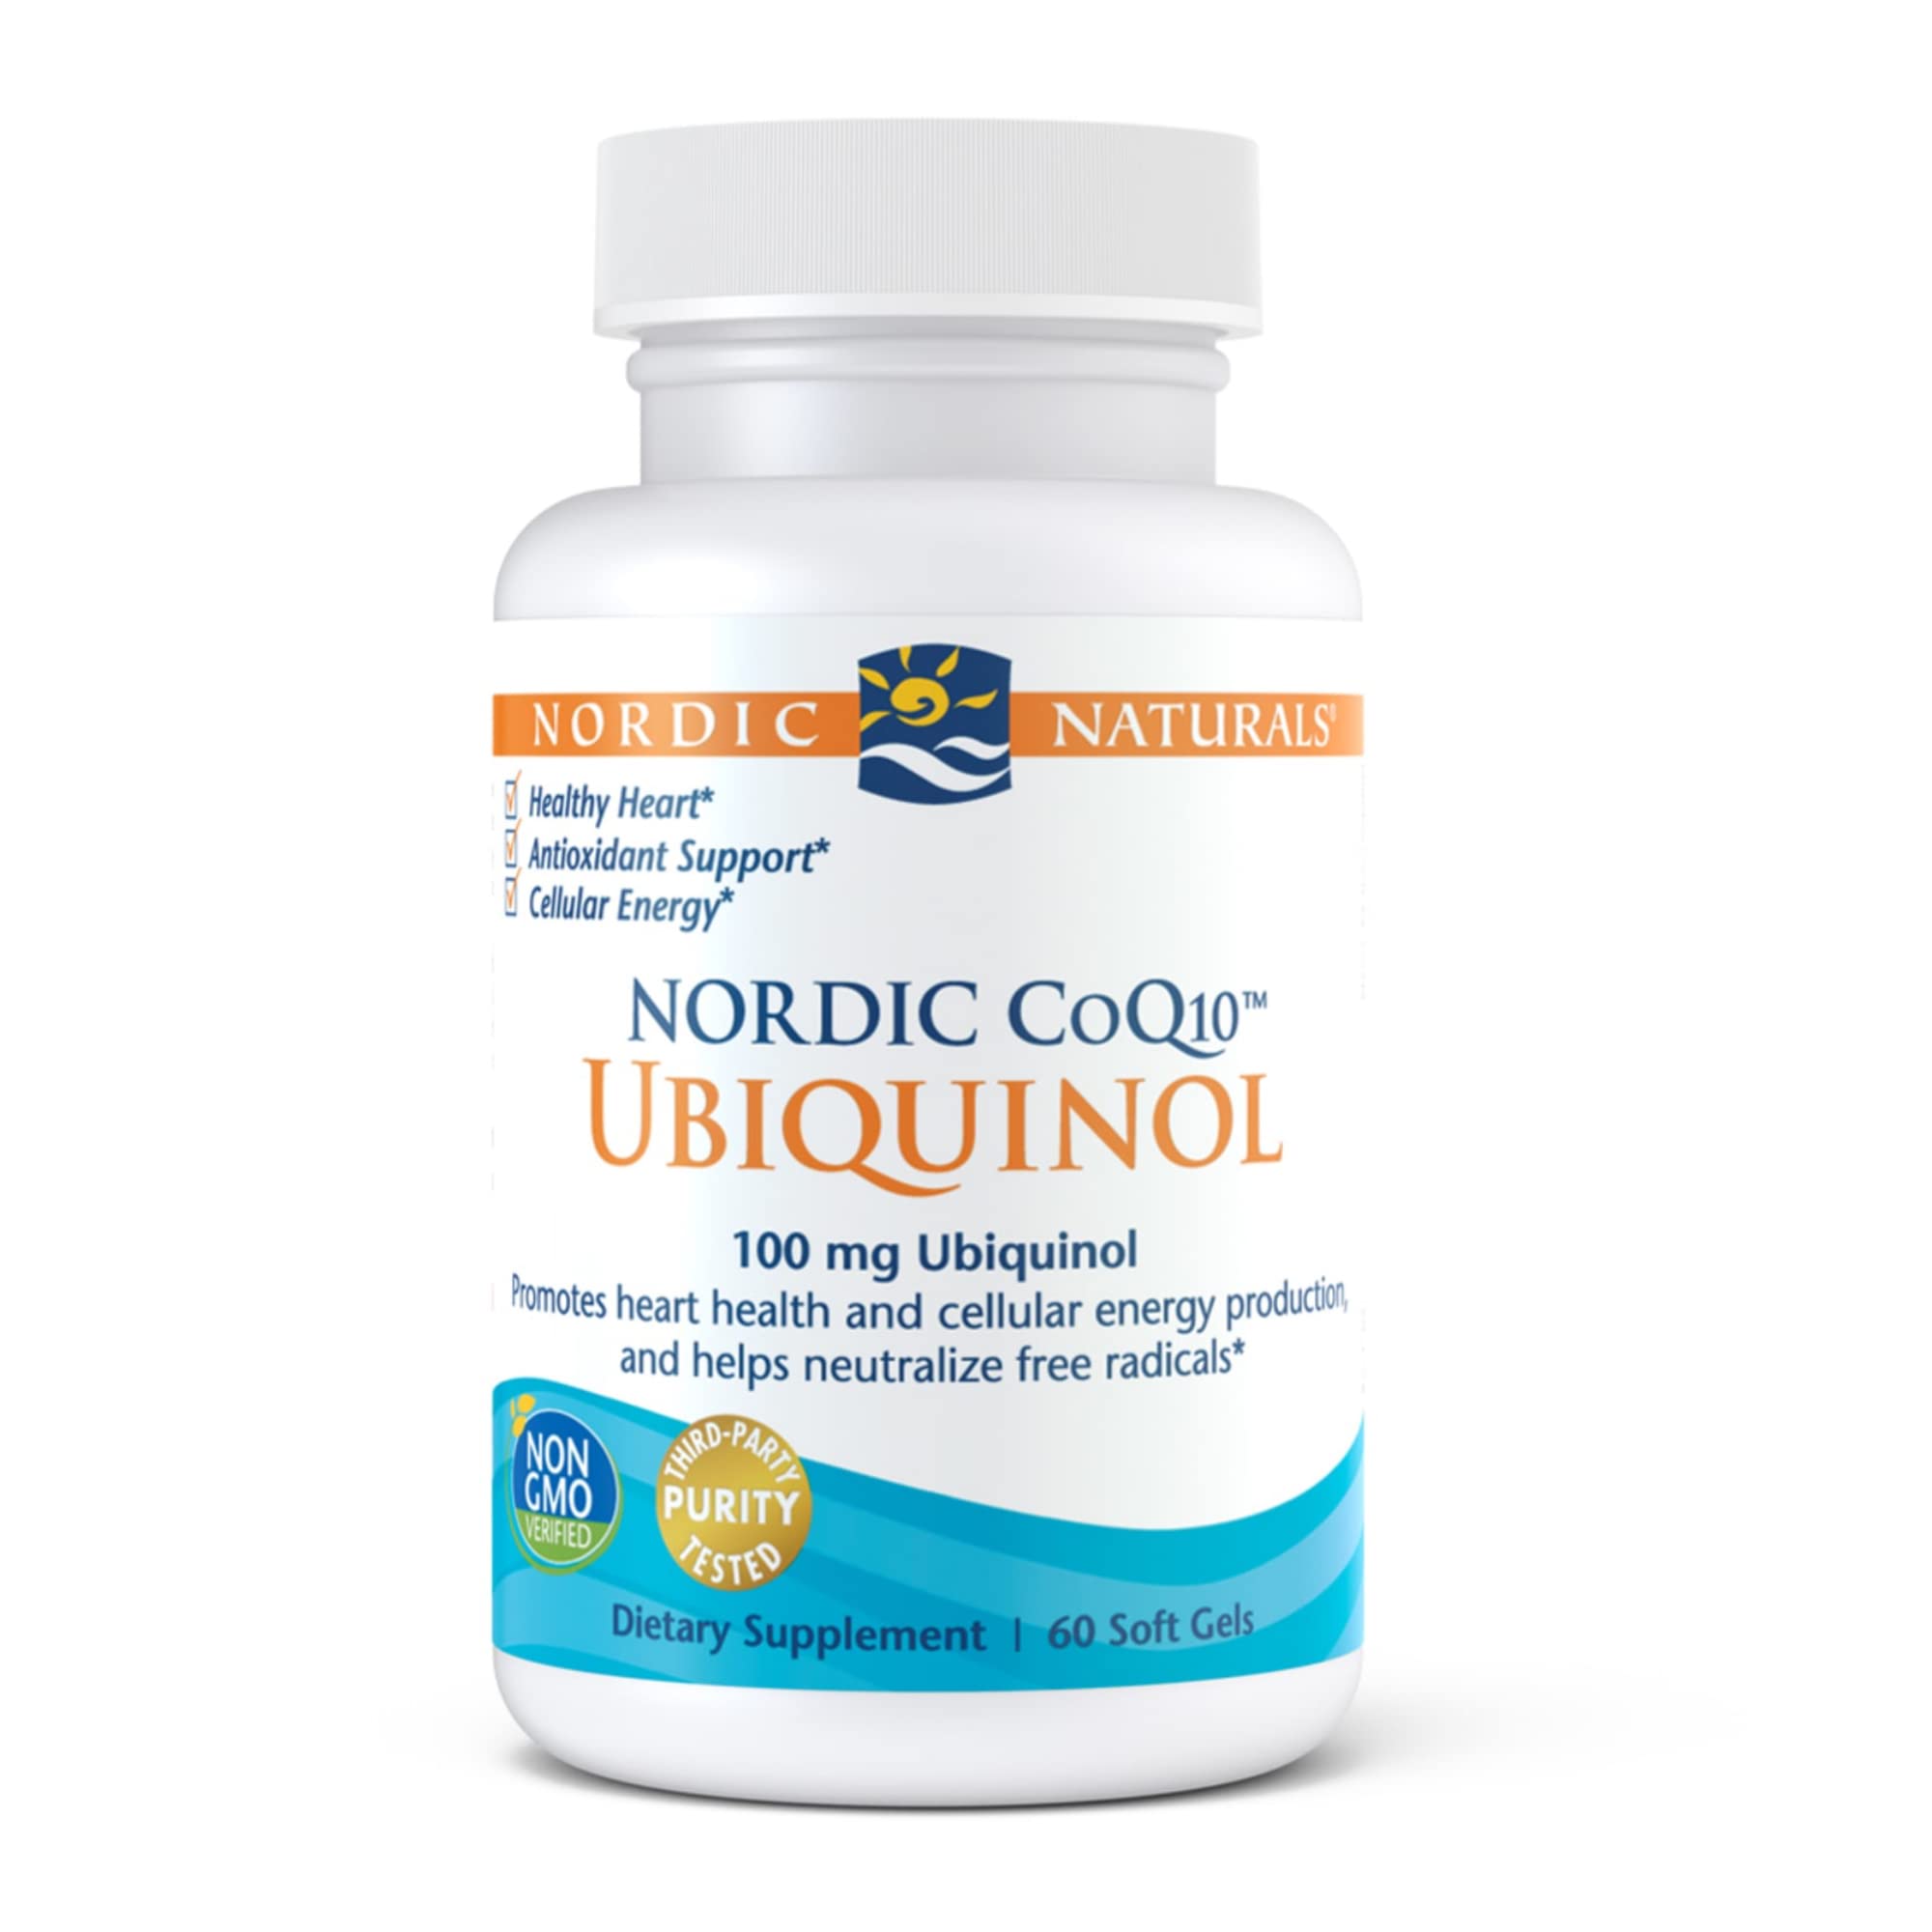 Nordic Naturals - Nordic CoQ10 Ubiquinol, Promotes Heart Health and Cellular Energy Production, 60 Soft Gels